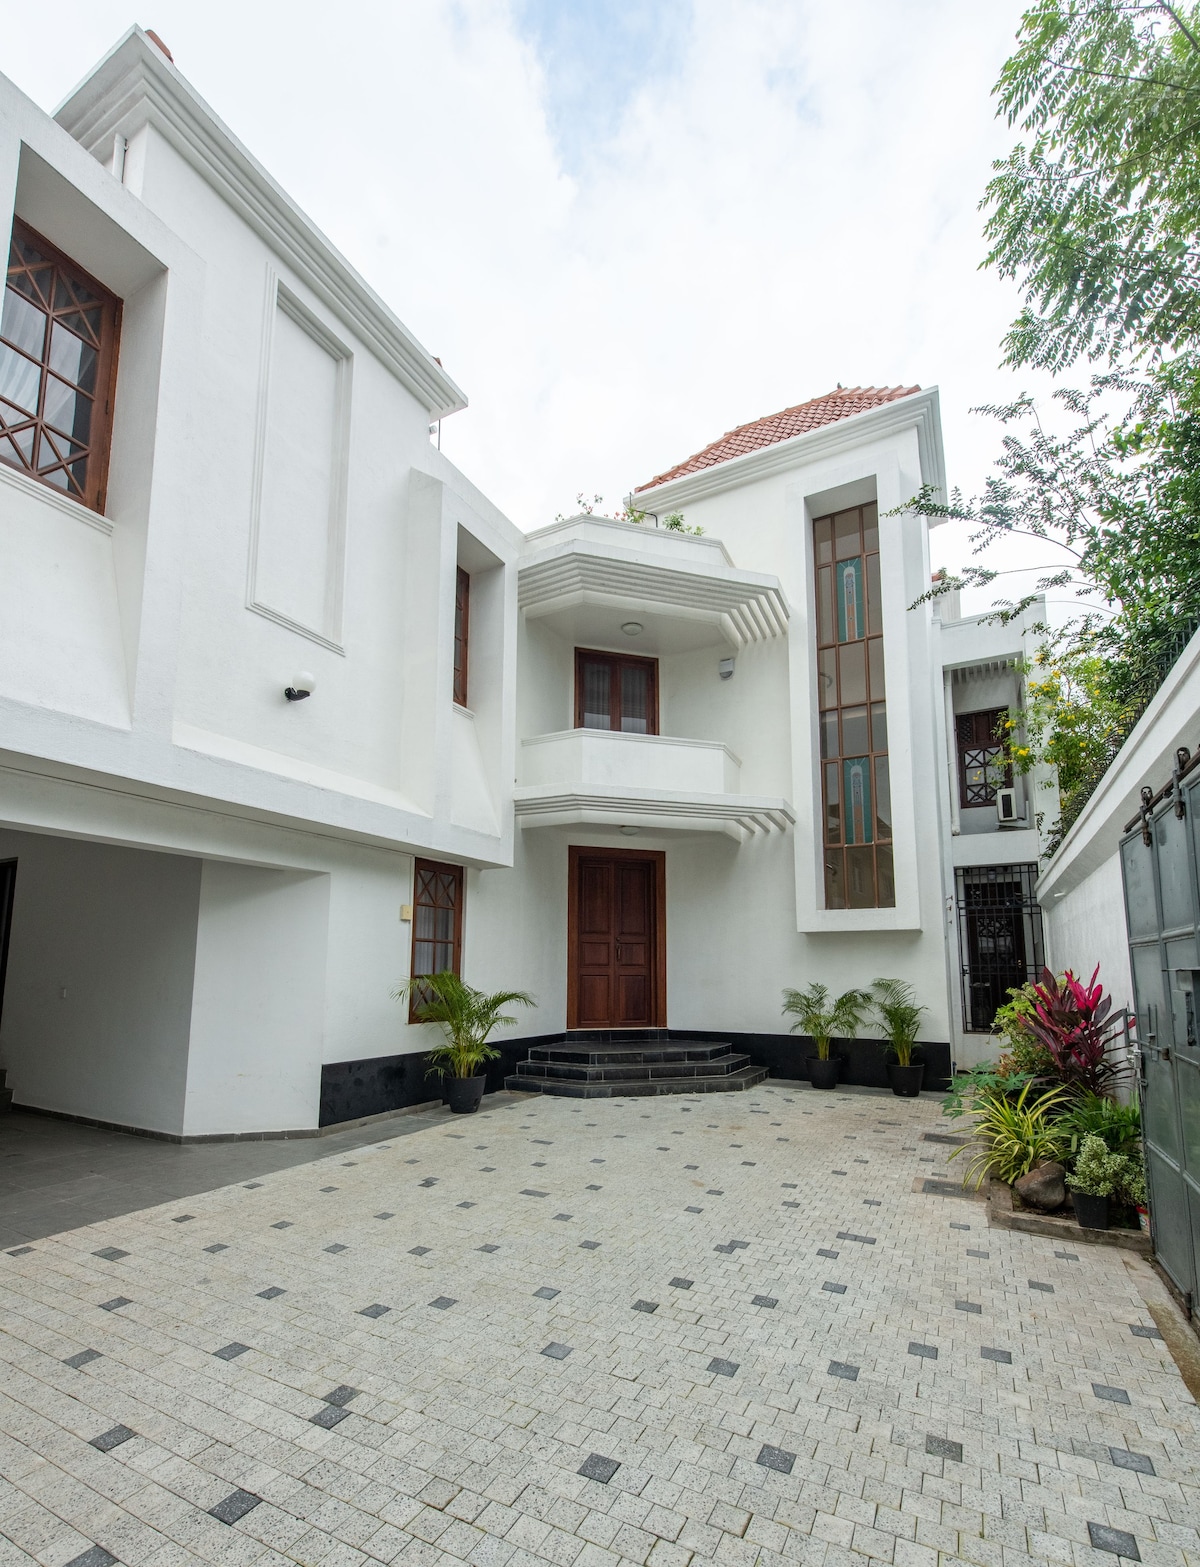 5 bed room villa bordering Golf Links in Colombo 8